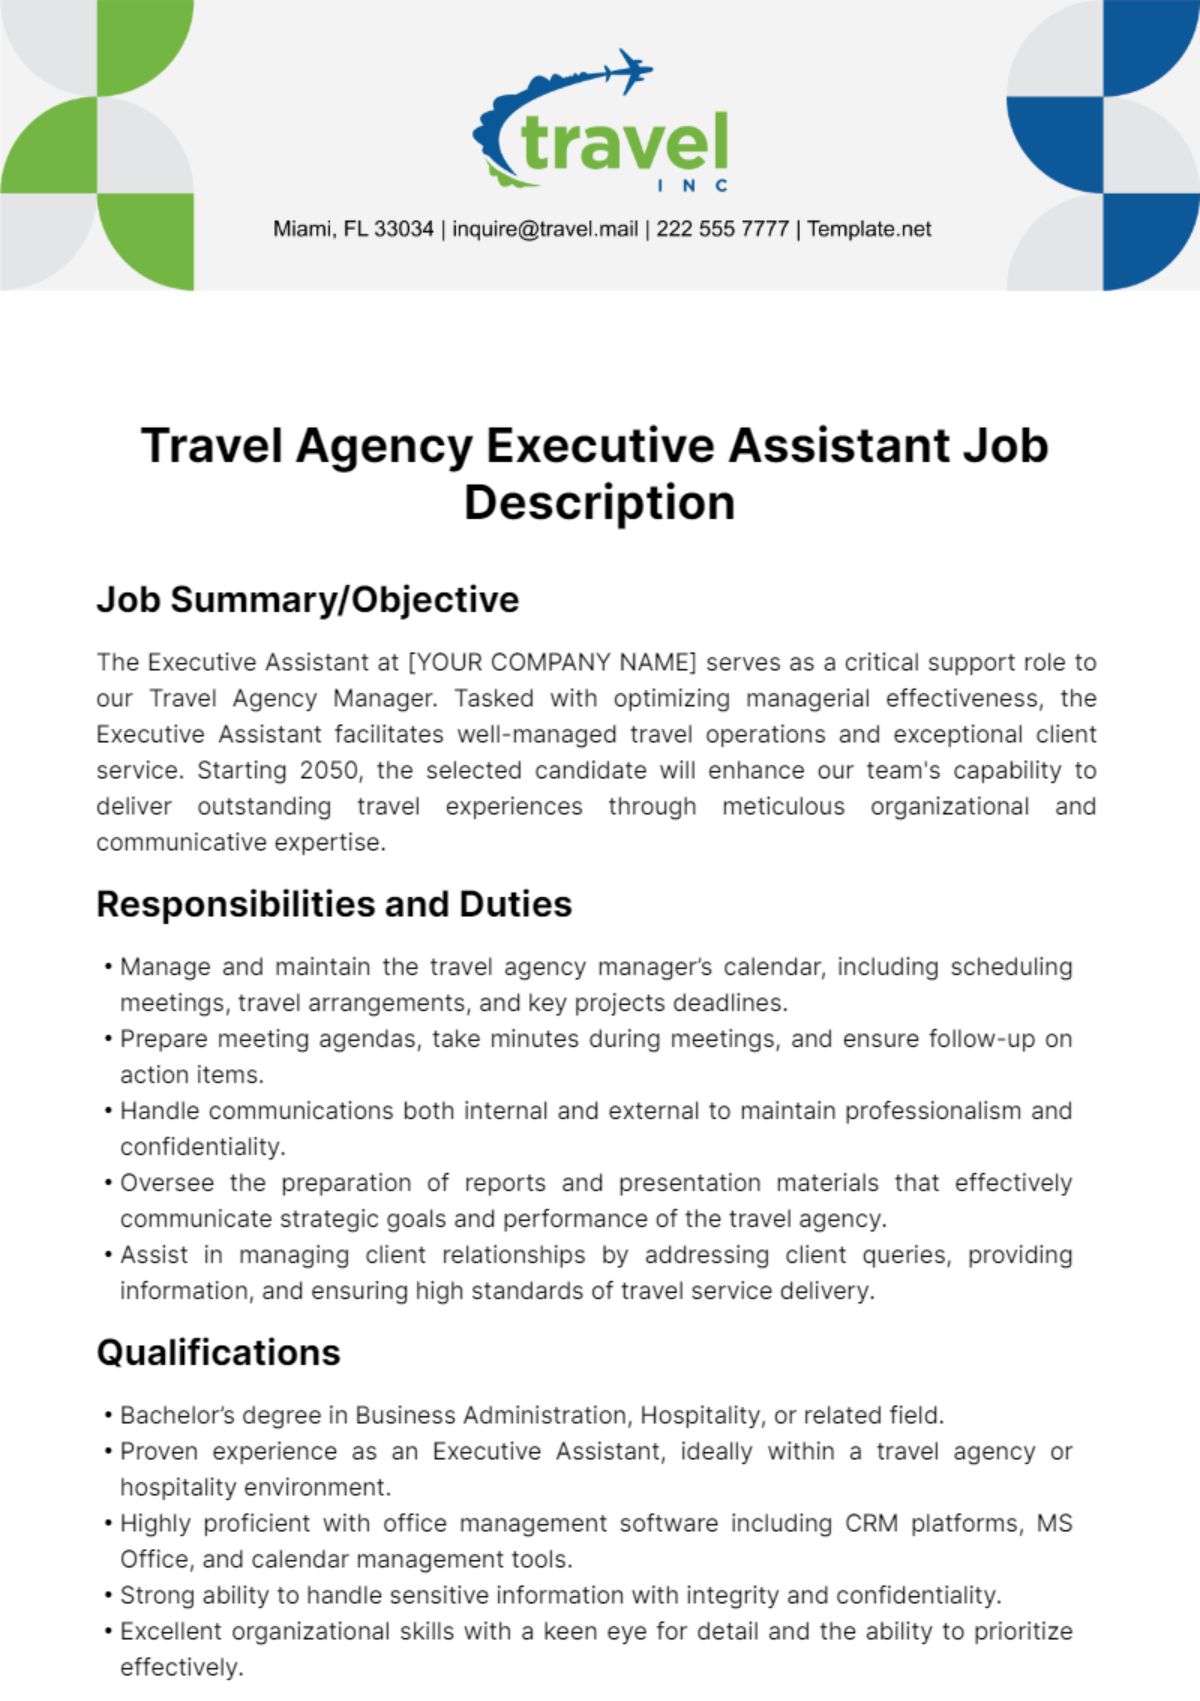 Free Travel Agency Executive Assistant Job Description Template